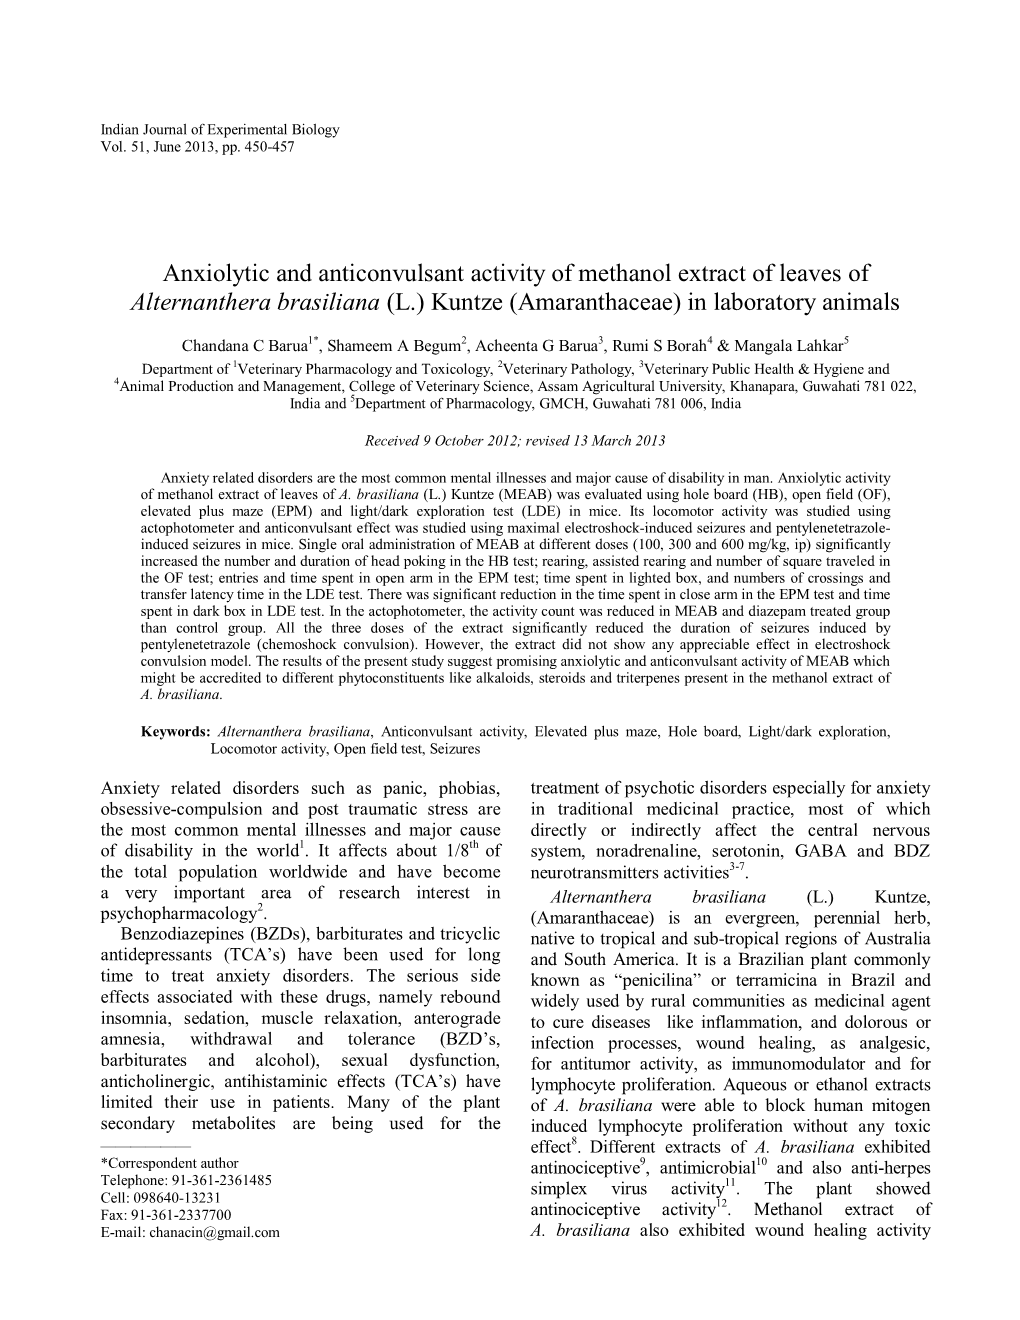 Anxiolytic and Anticonvulsant Activity of Methanol Extract of Leaves of Alternanthera Brasiliana (L.) Kuntze (Amaranthaceae) in Laboratory Animals